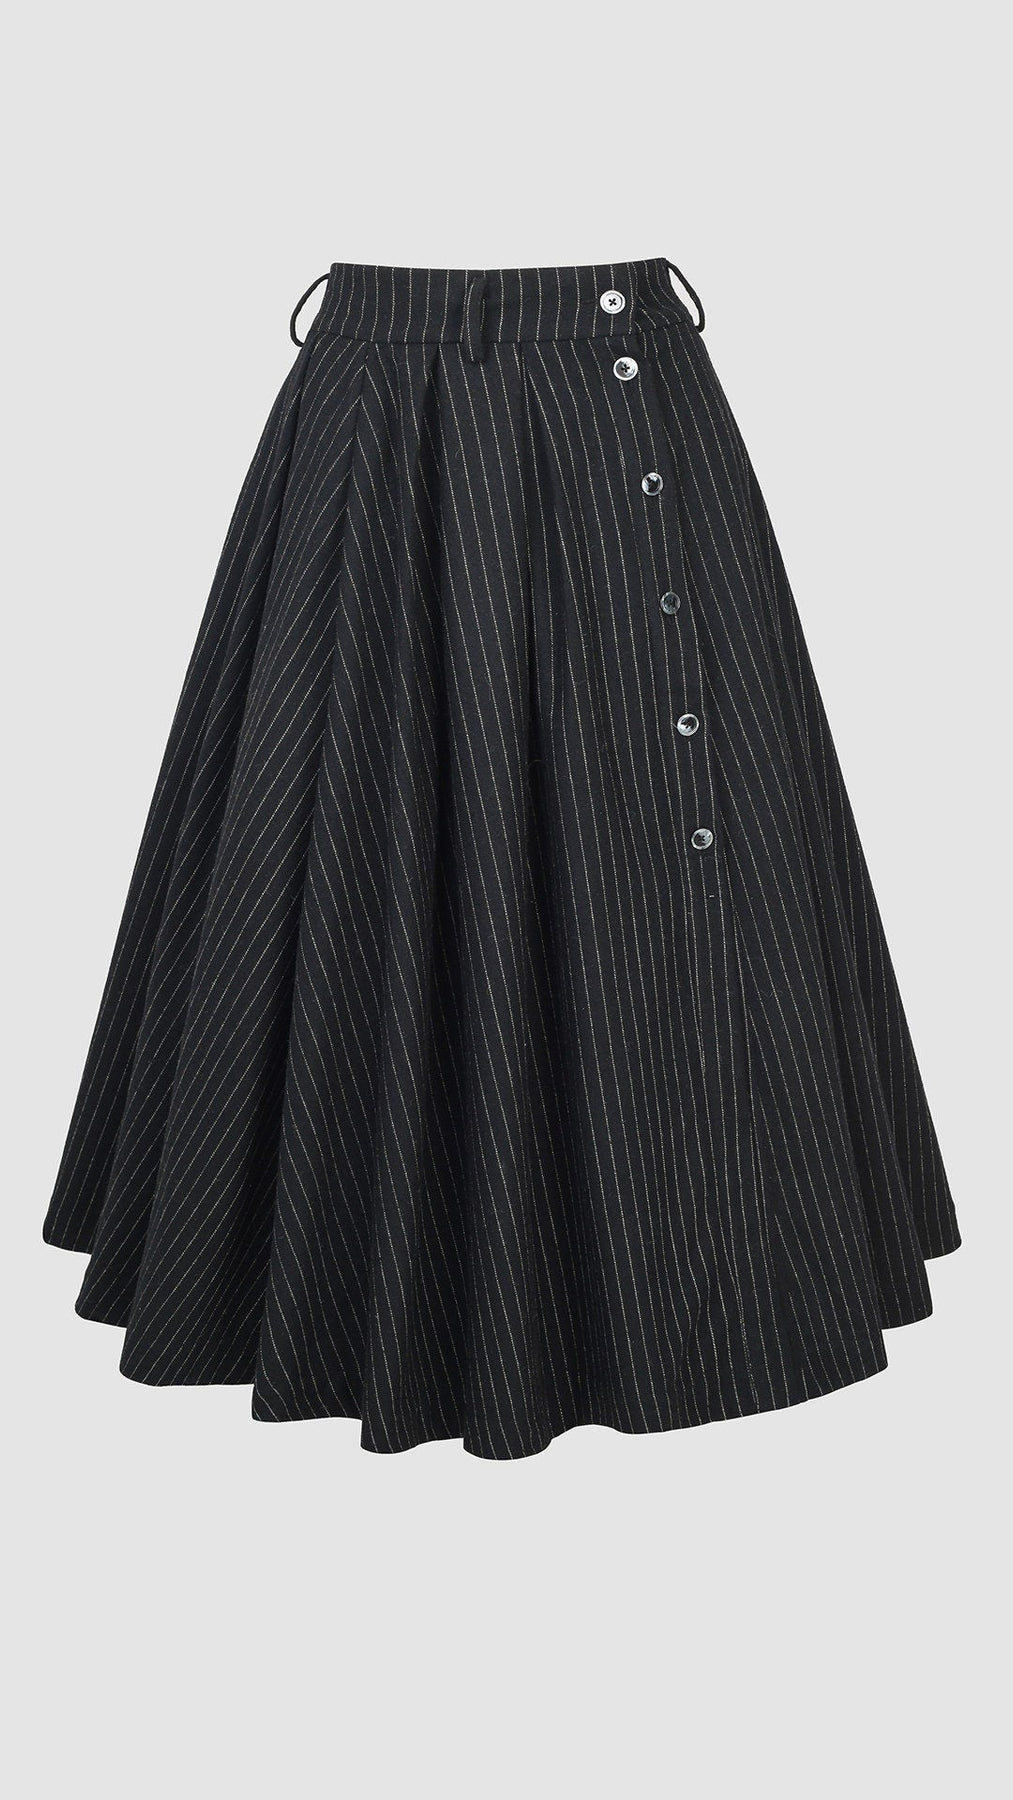 Santal 3 | Striped Wool Skirt in black – Linennaive